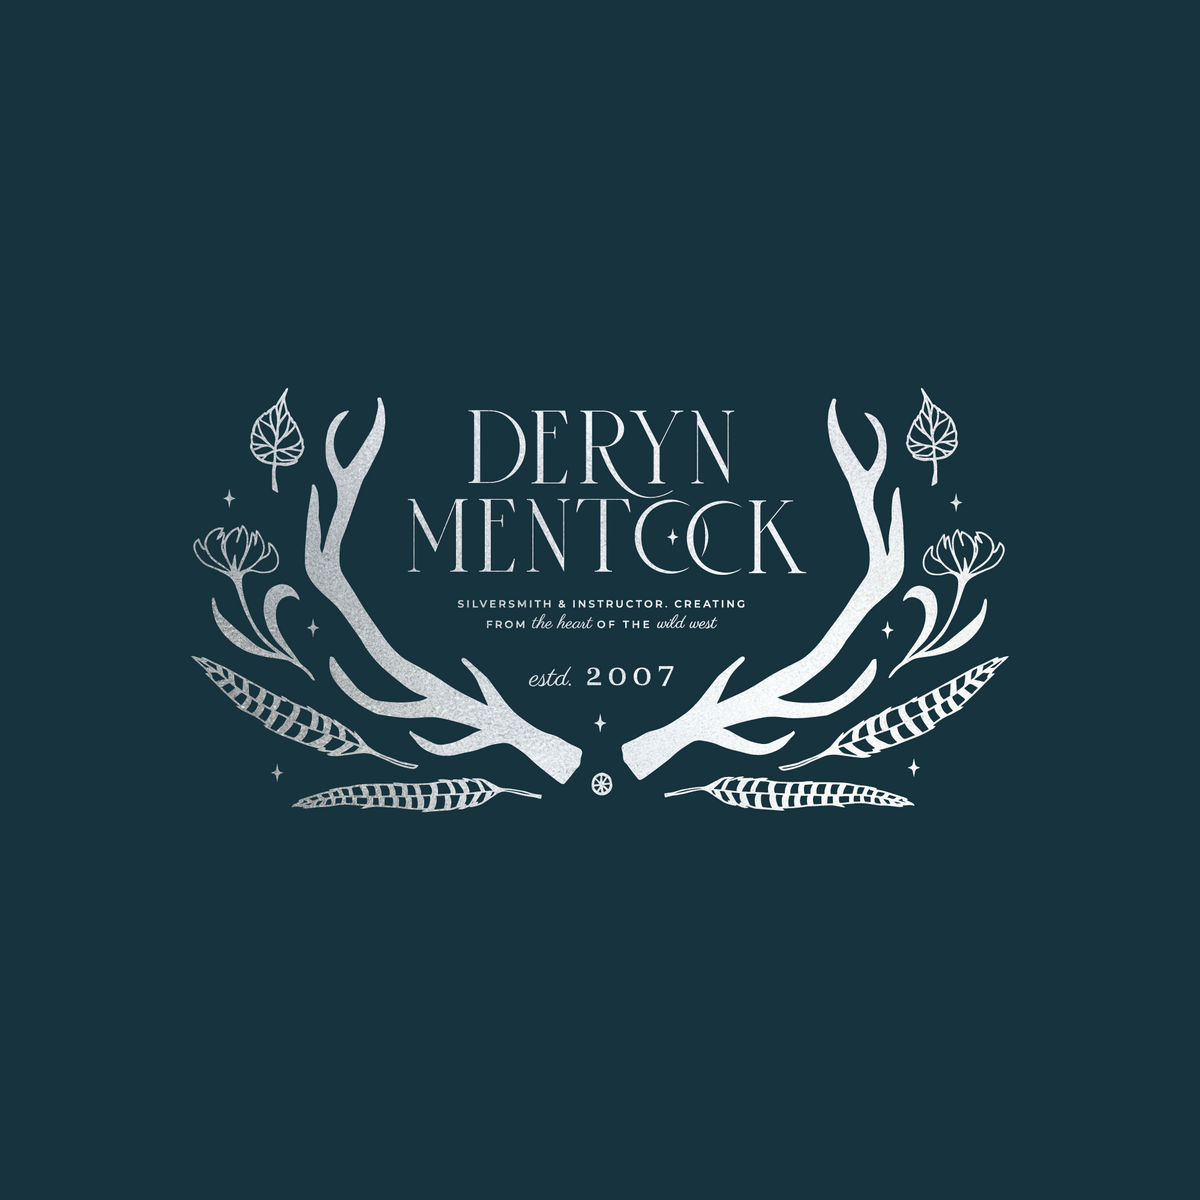 DerynMentock_SocialMedia1